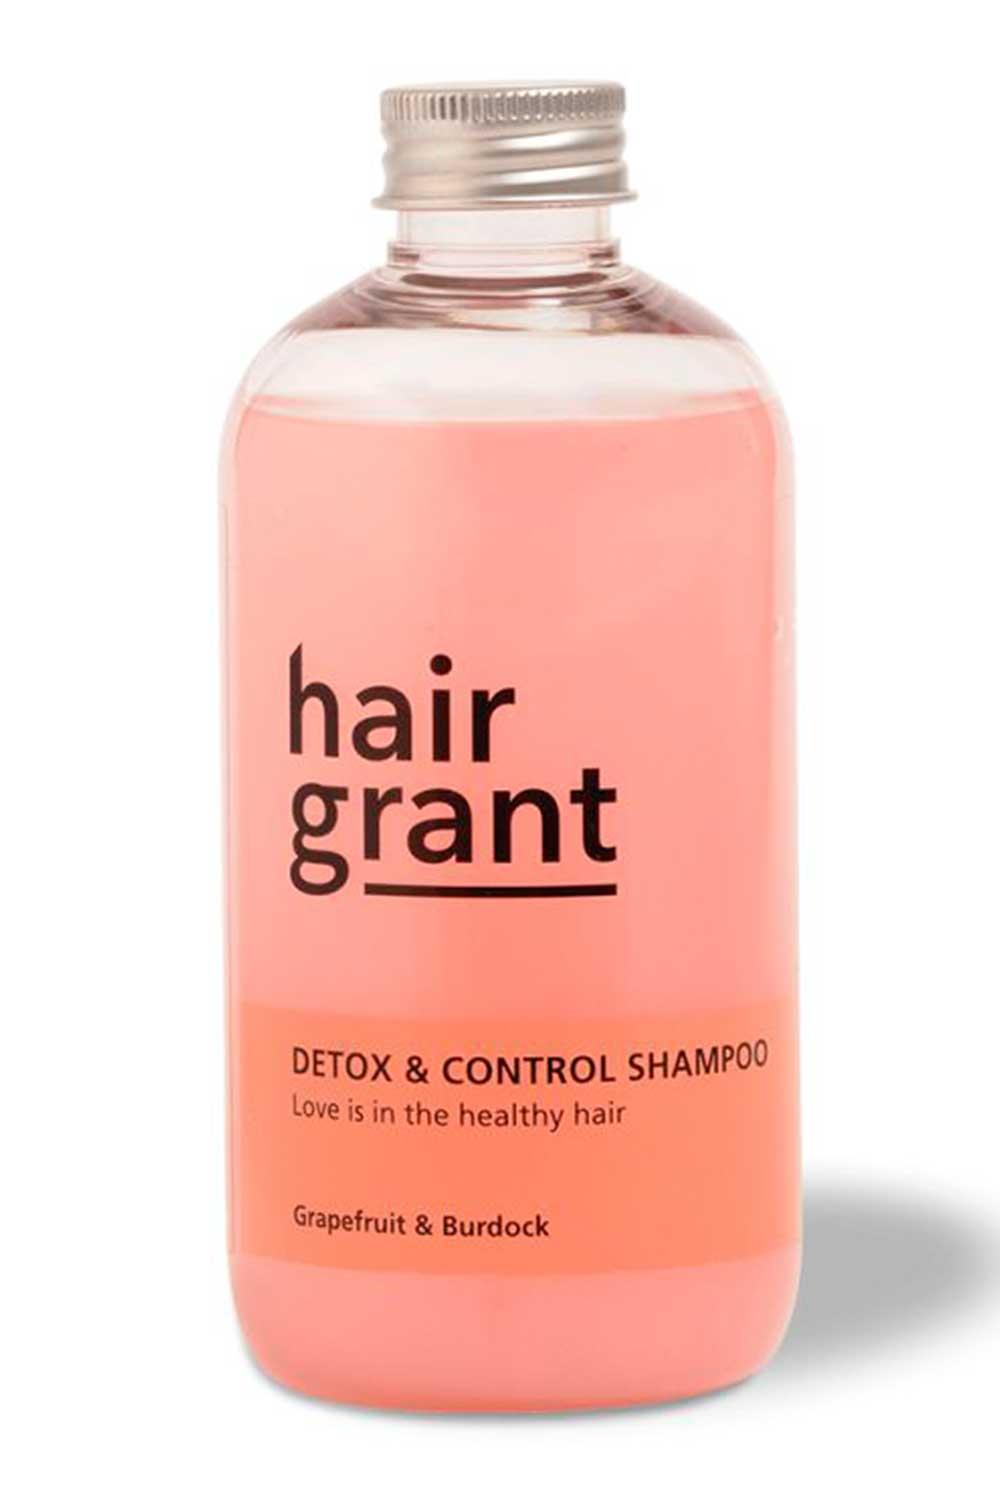 HairGrant. Champú Detox & control, Hair Grant